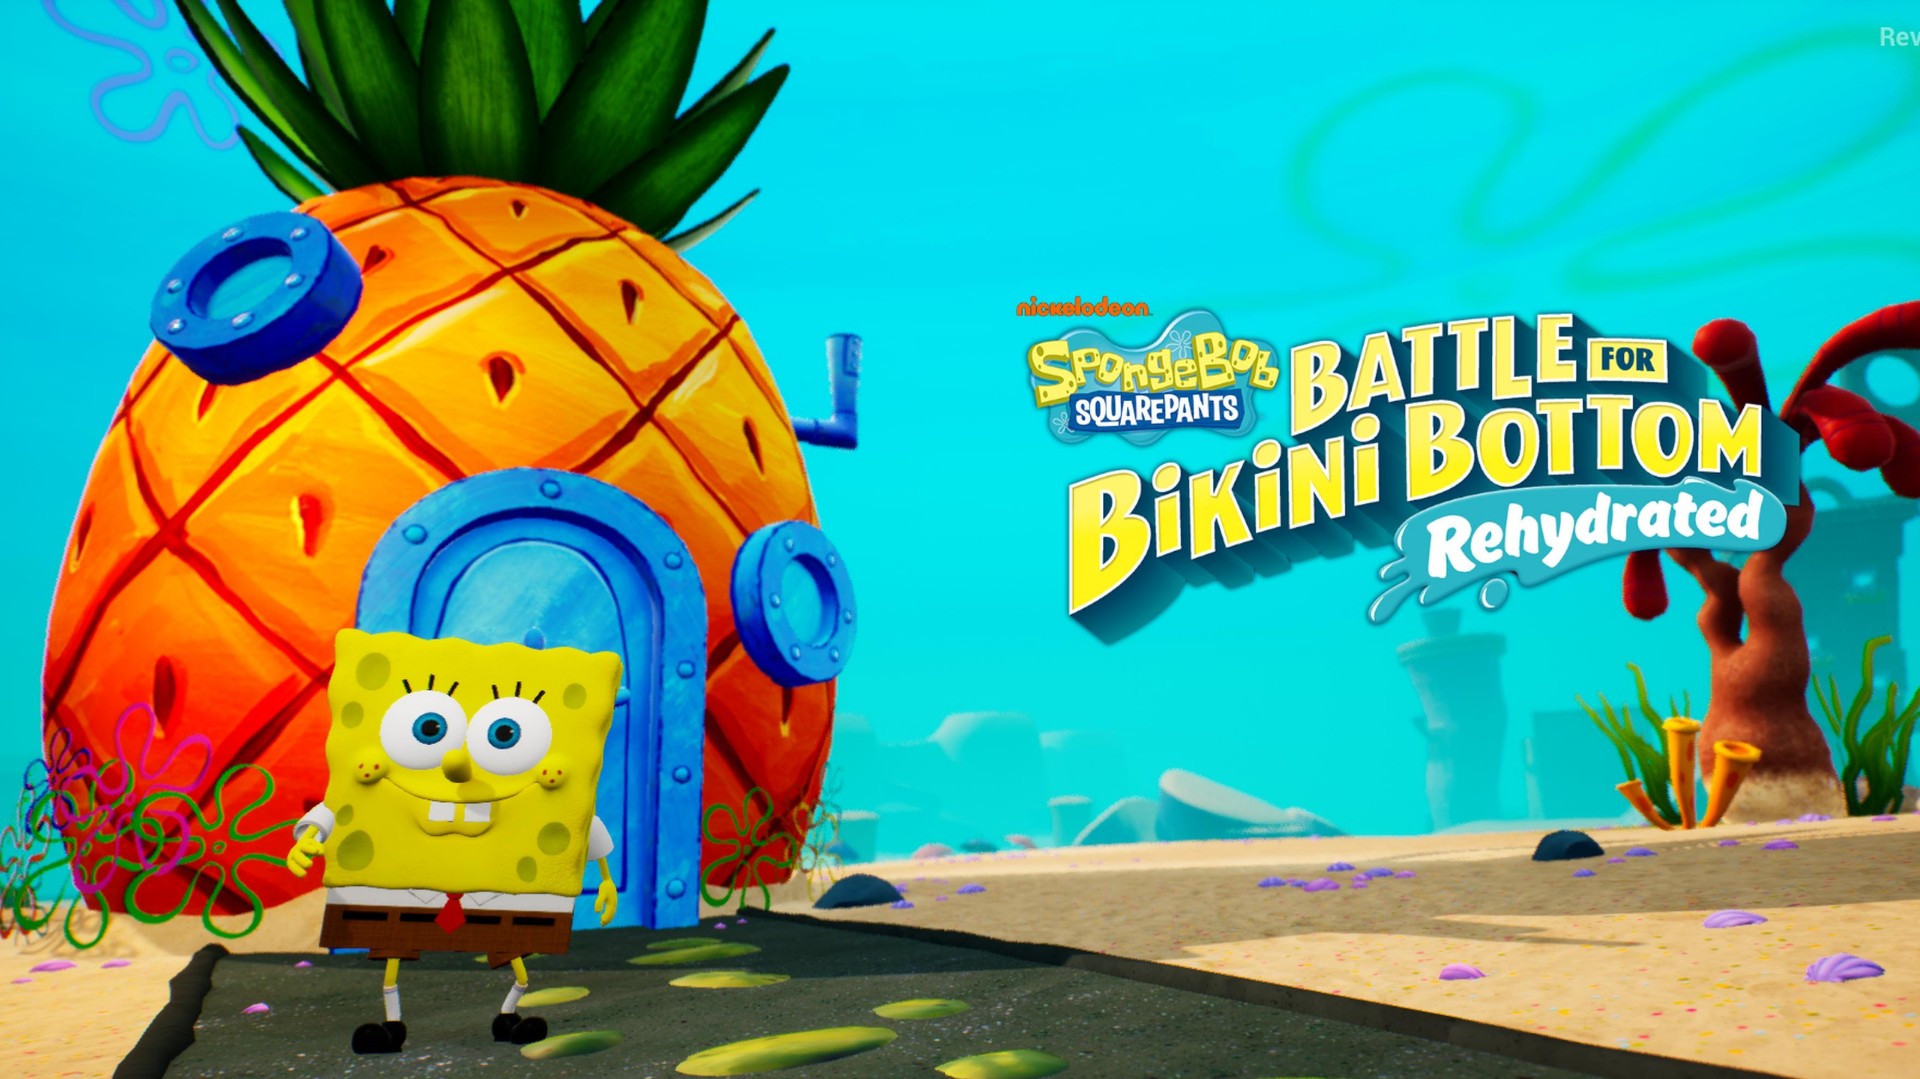 – Bikini SquarePants: Review Rehydrated Battle Bottom for SpongeBob